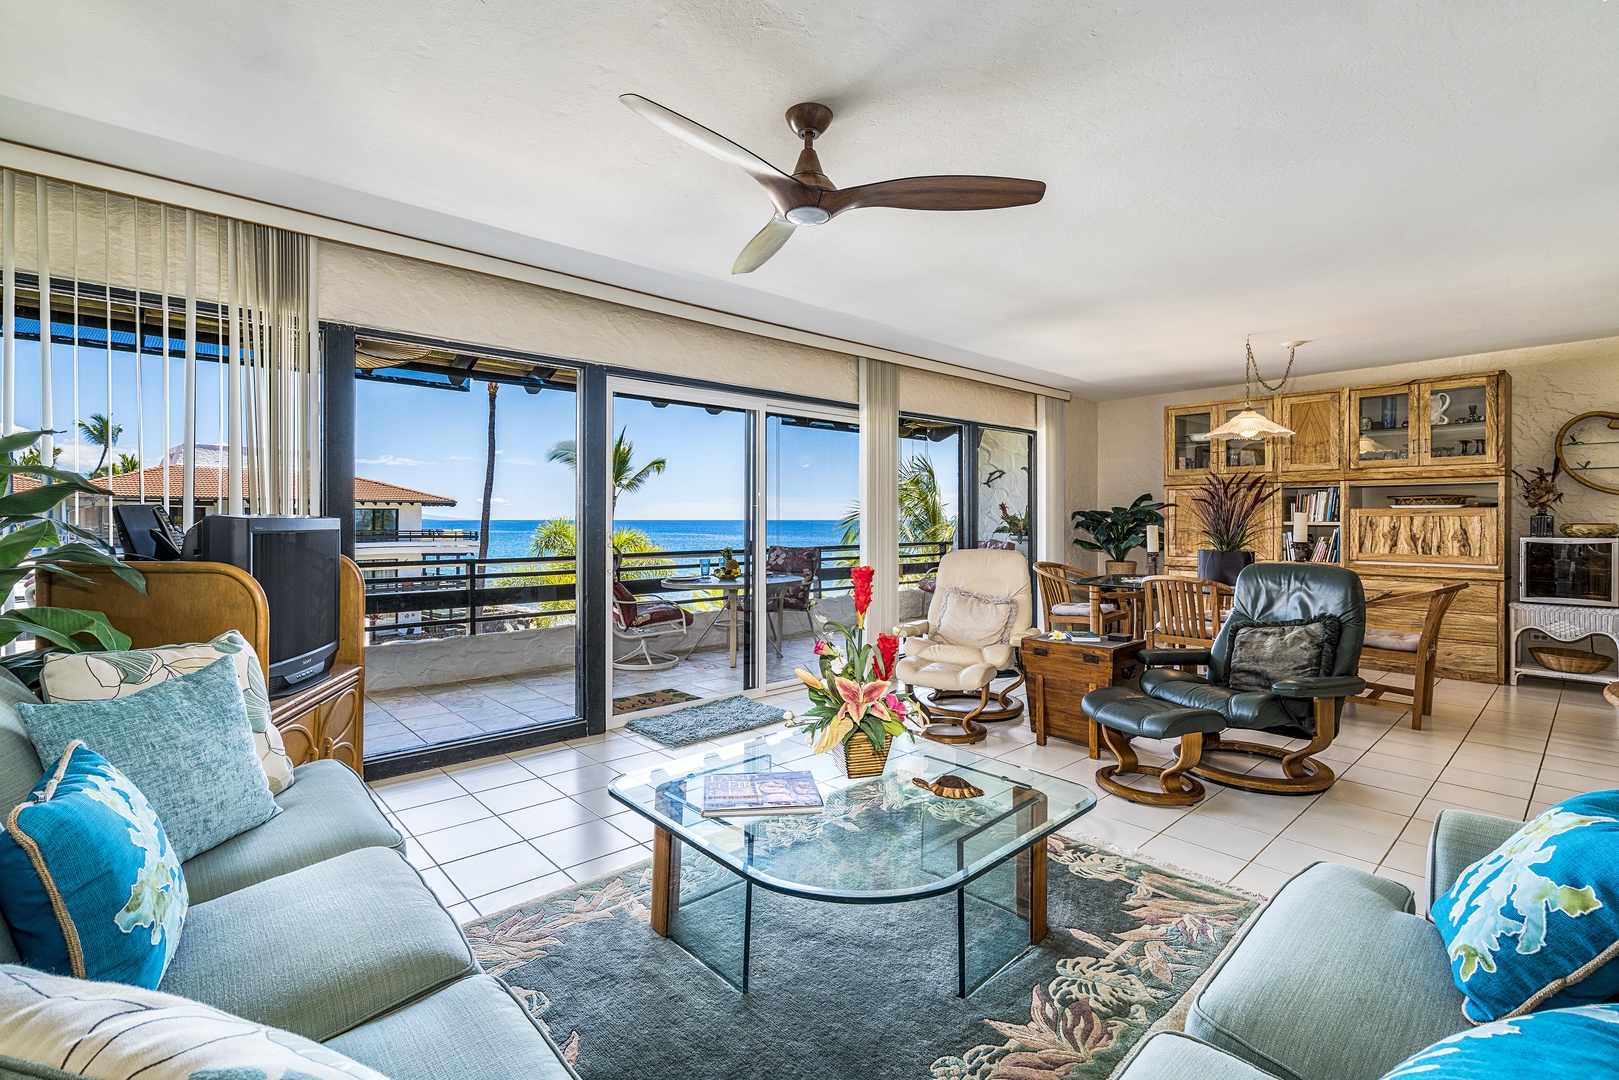 Kailua Kona Vacation Rentals, Casa De Emdeko 336 - Take in the view or read a book in the spacious living room